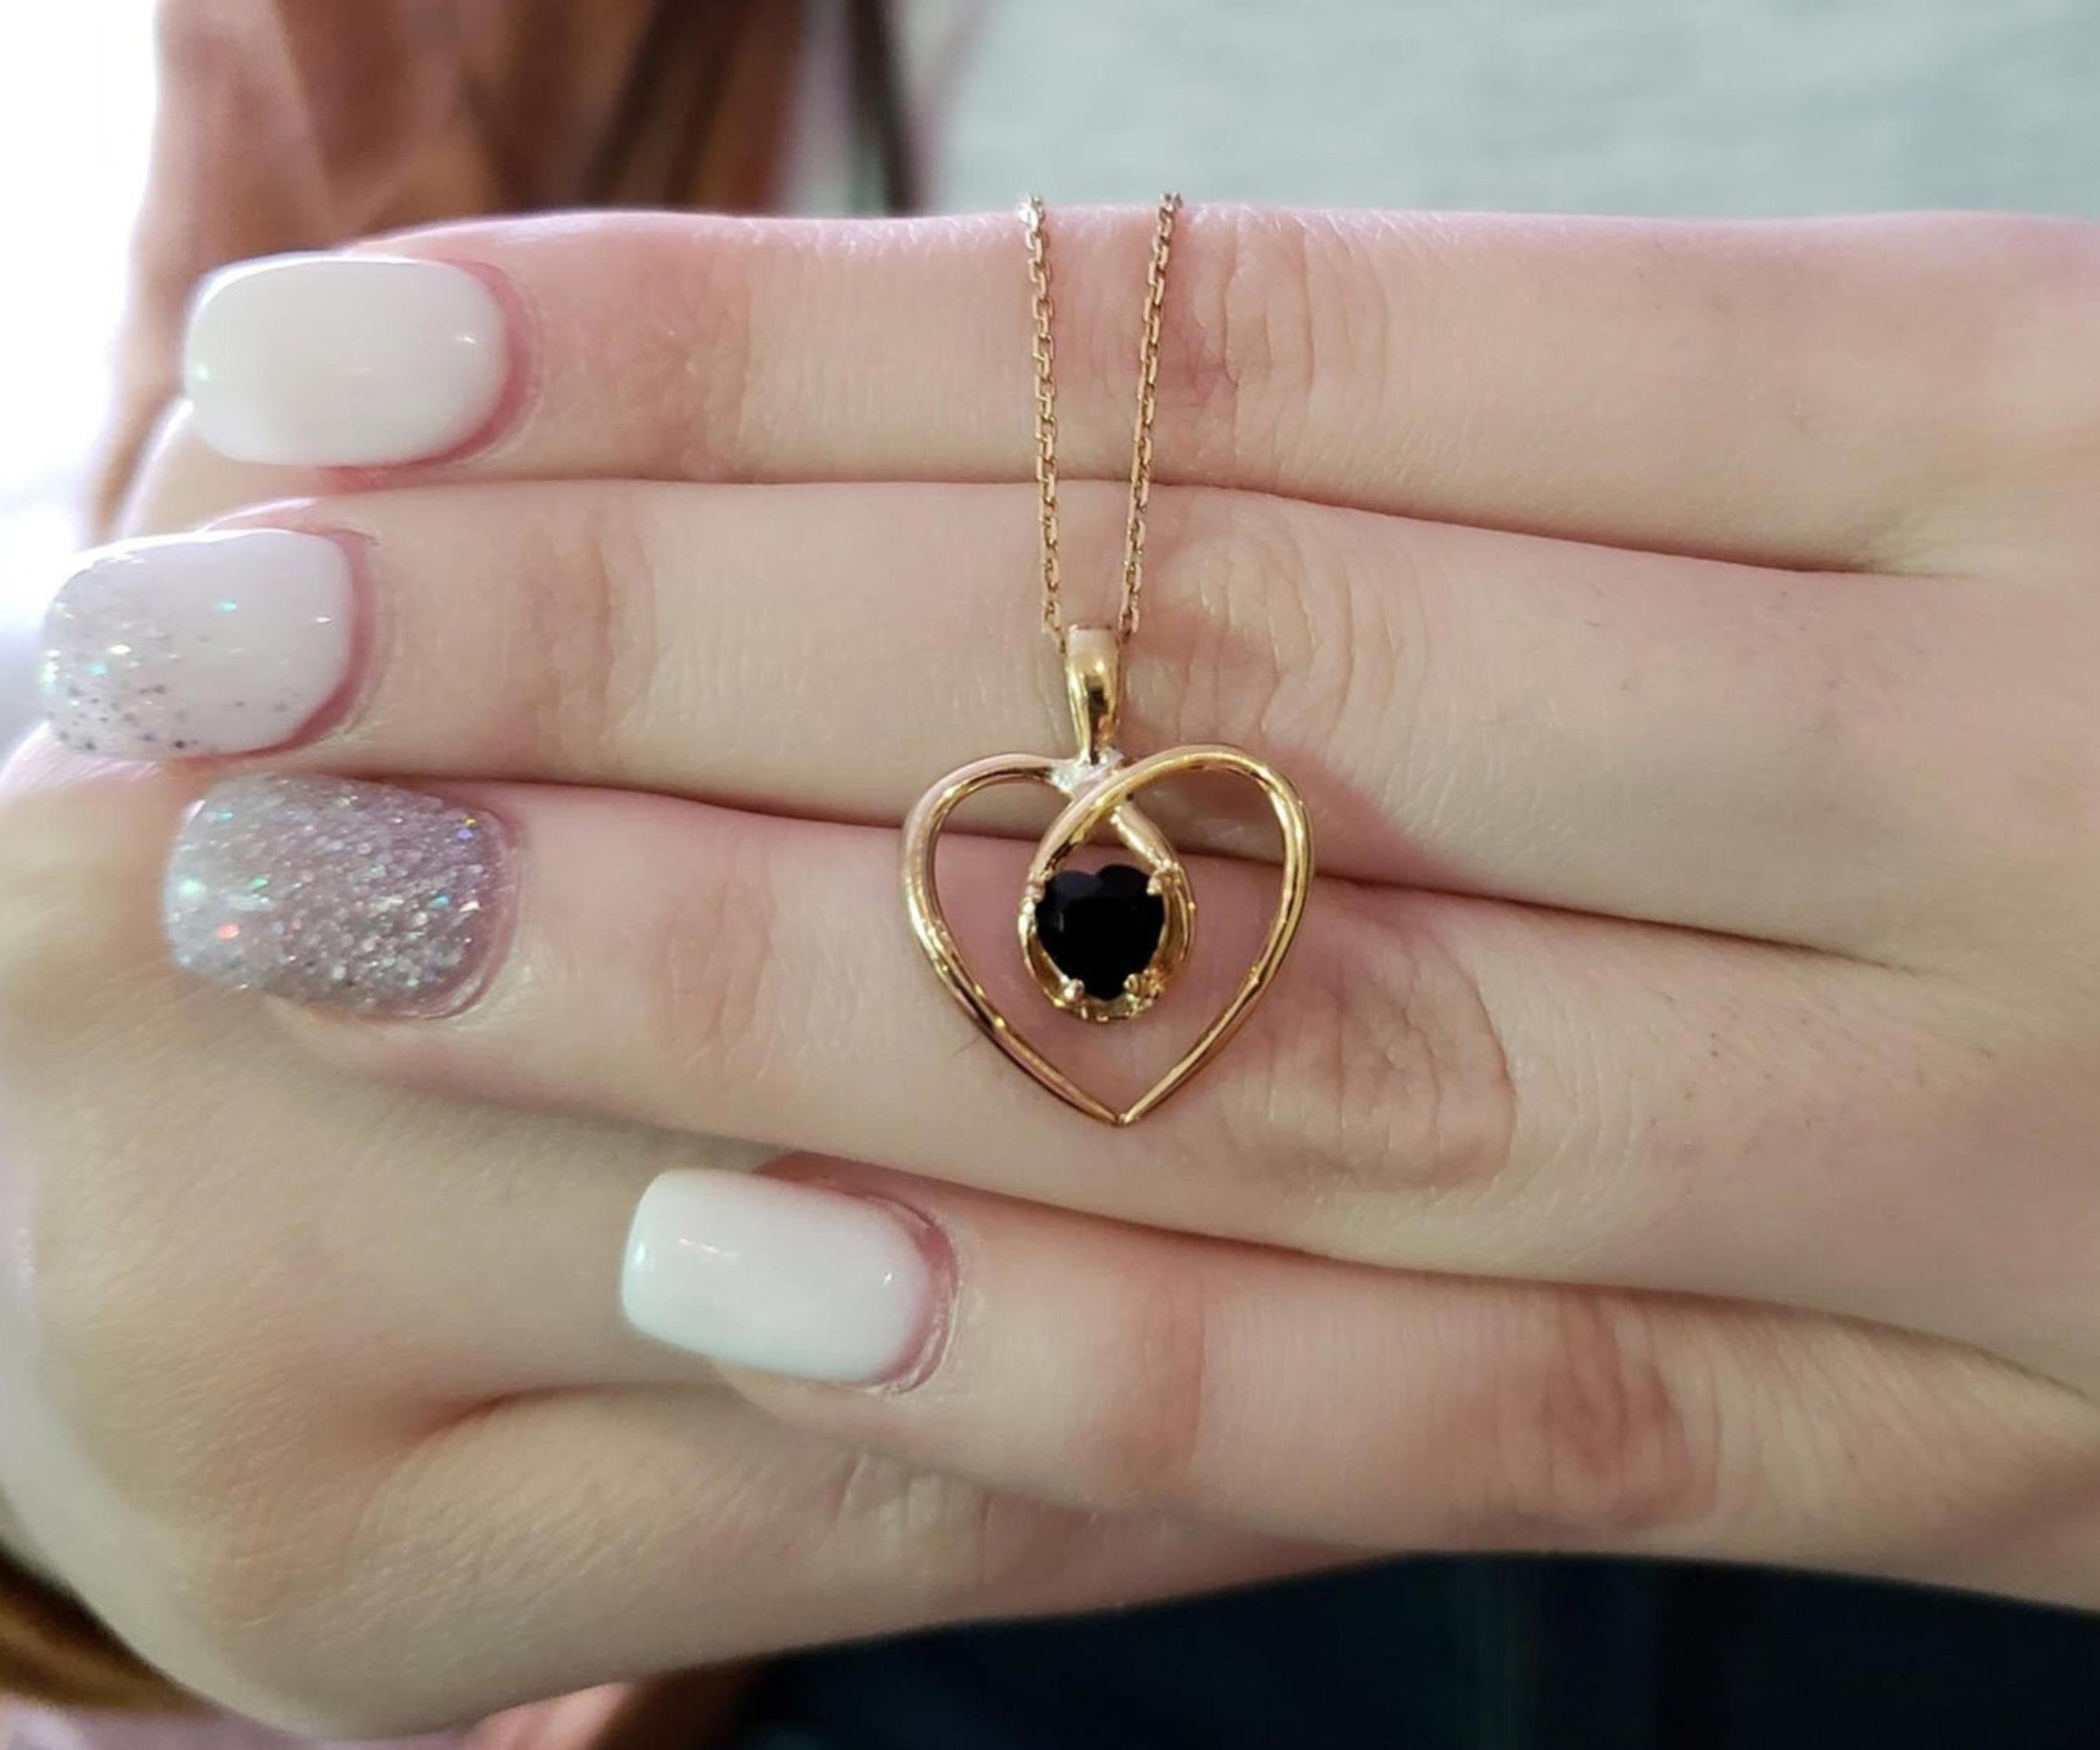 14Kt Gold Genuine Black Onyx Heart Design Pendant Necklace